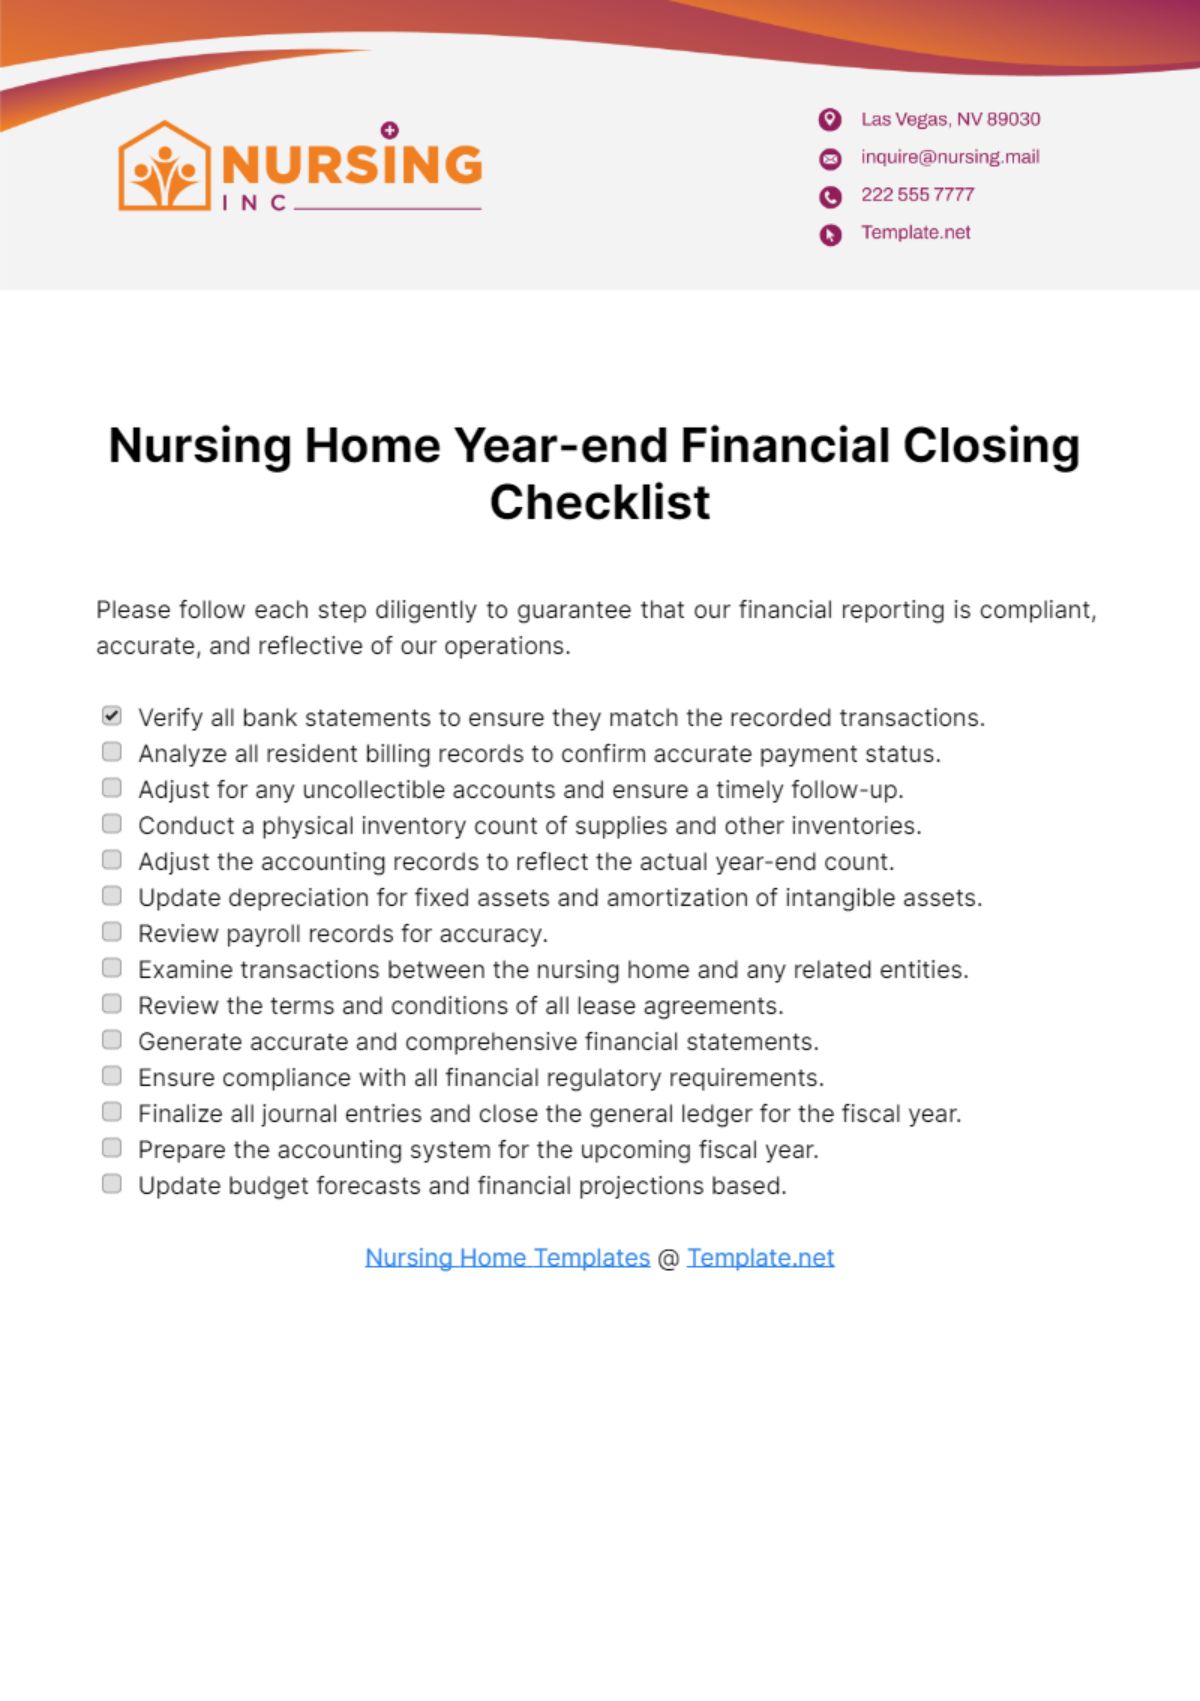 Nursing Home Year-end Financial Closing Checklist Template